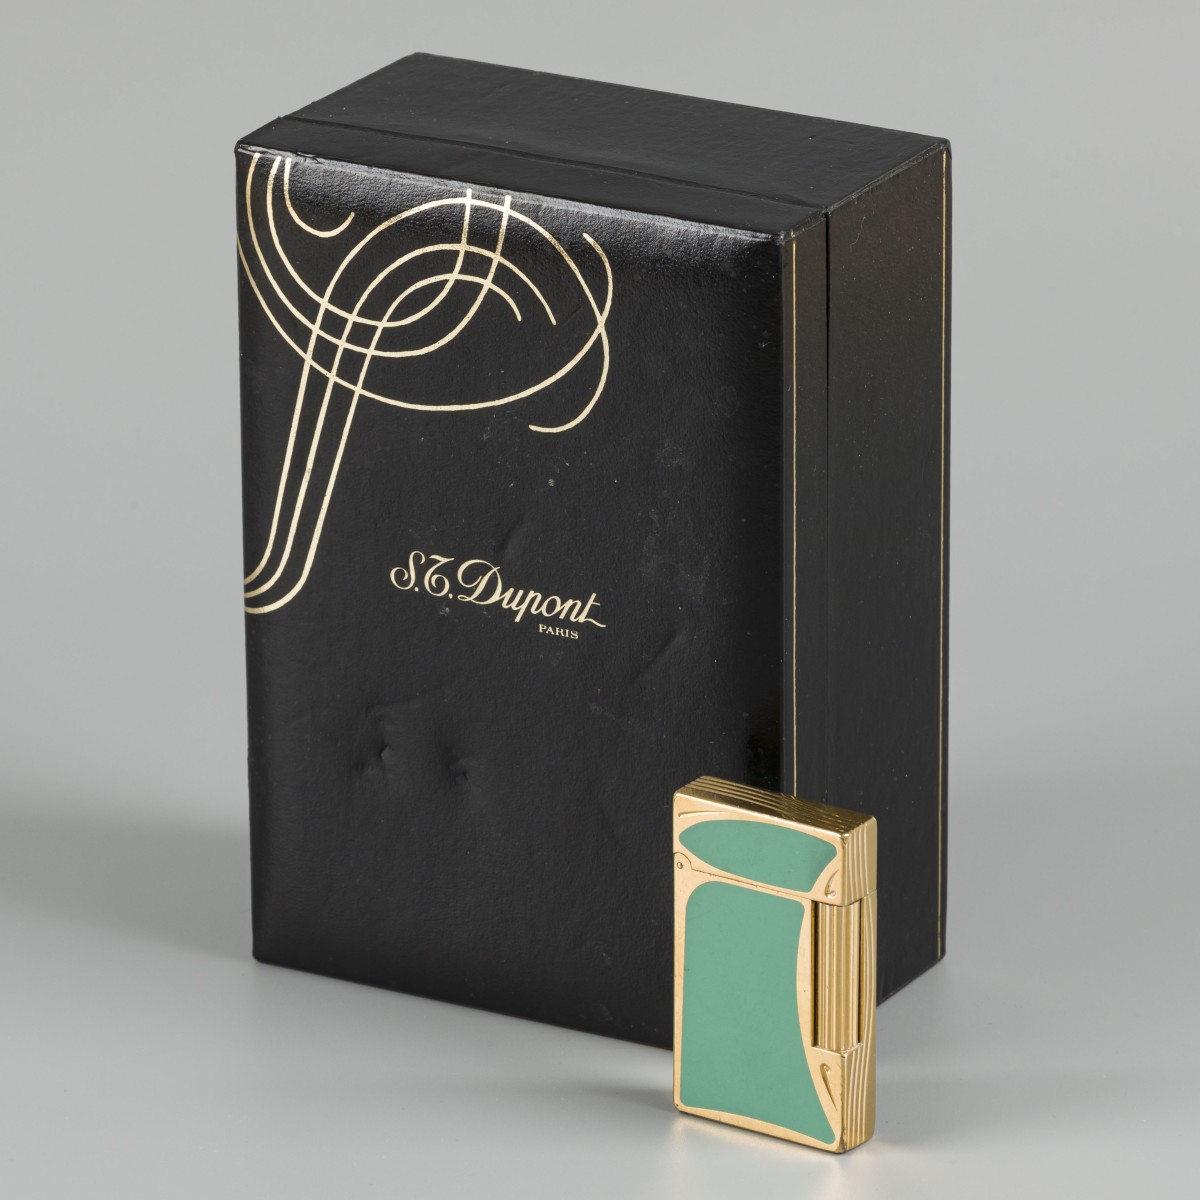 S.T. Dupont Art Nouveau aansteker met originele doos Limited Edition.